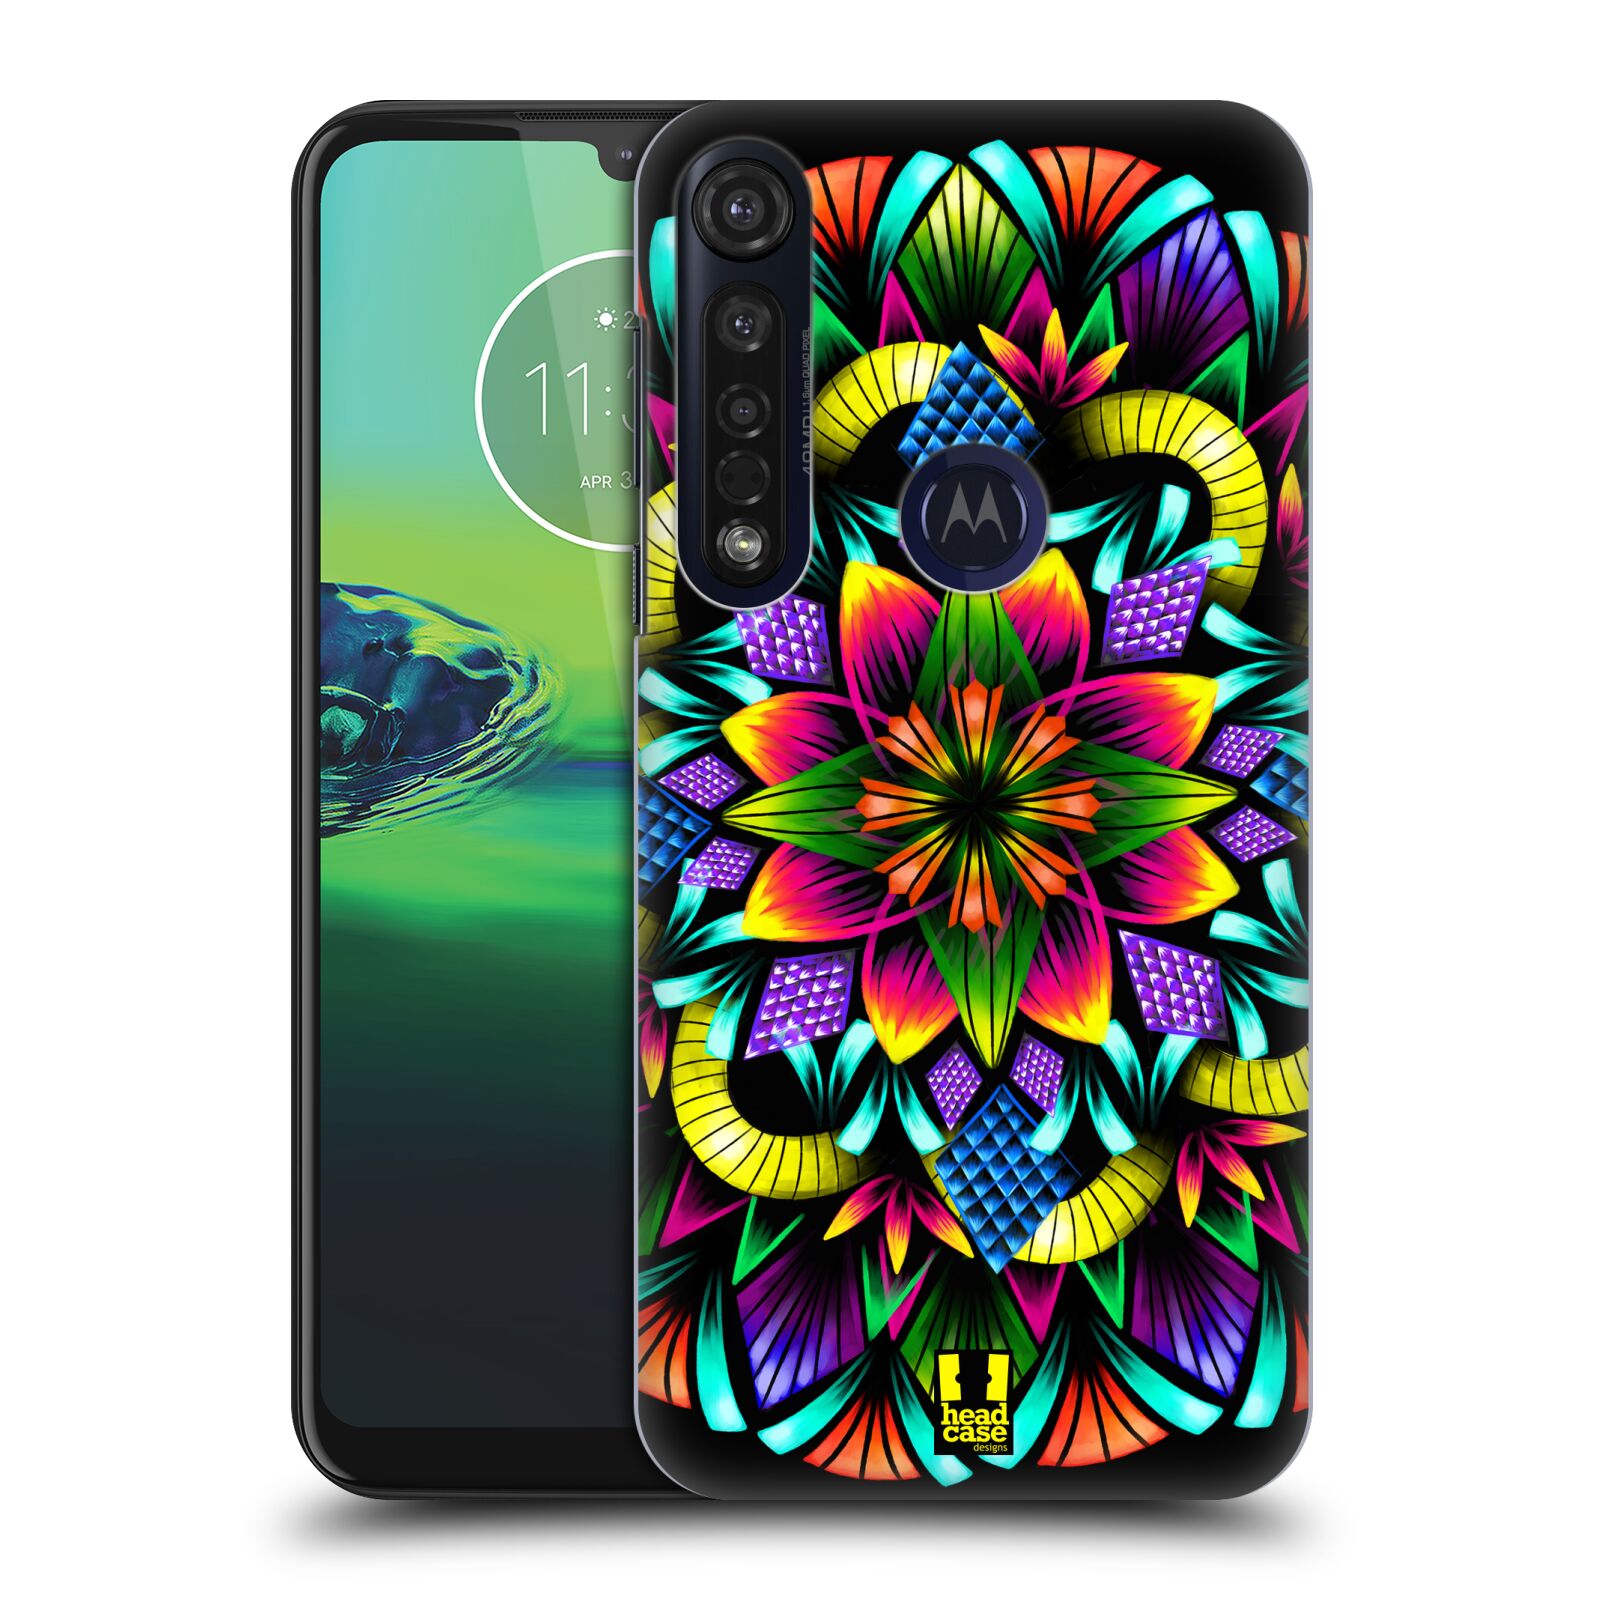 Pouzdro na mobil Motorola Moto G8 PLUS - HEAD CASE - vzor Indie Mandala kaleidoskop barevný vzor KVĚTINA